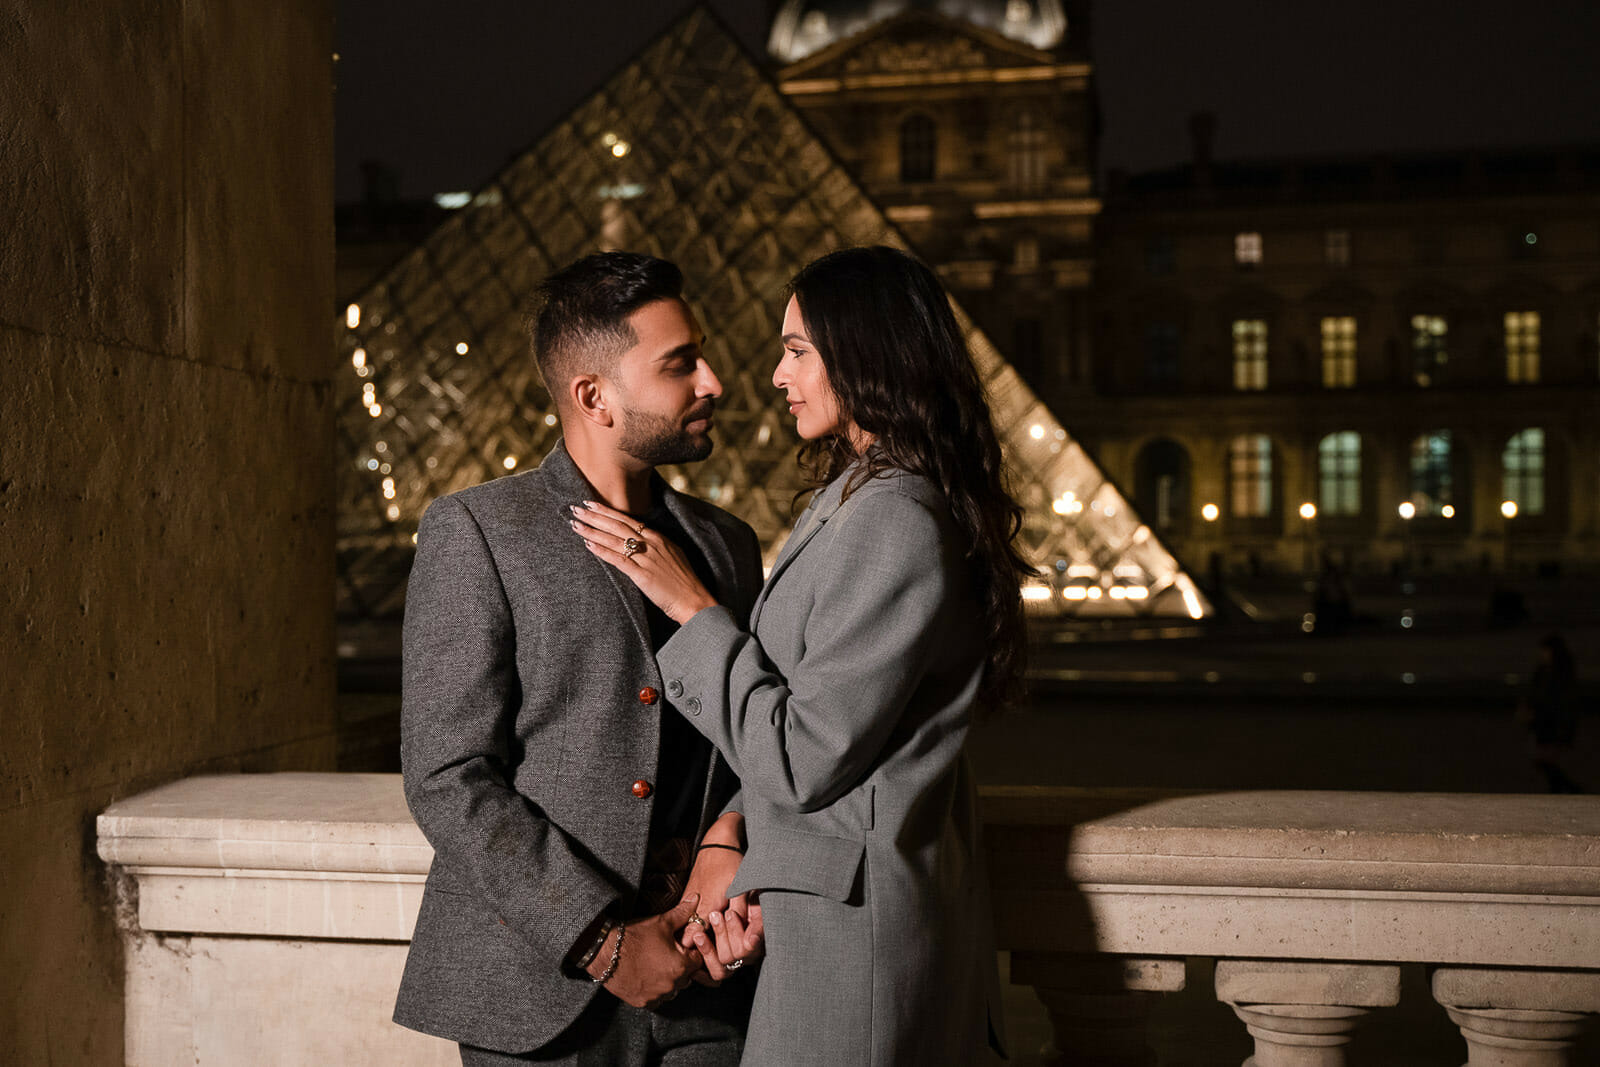 Romantic nighttime photos at the Louvre Museum Pyramid